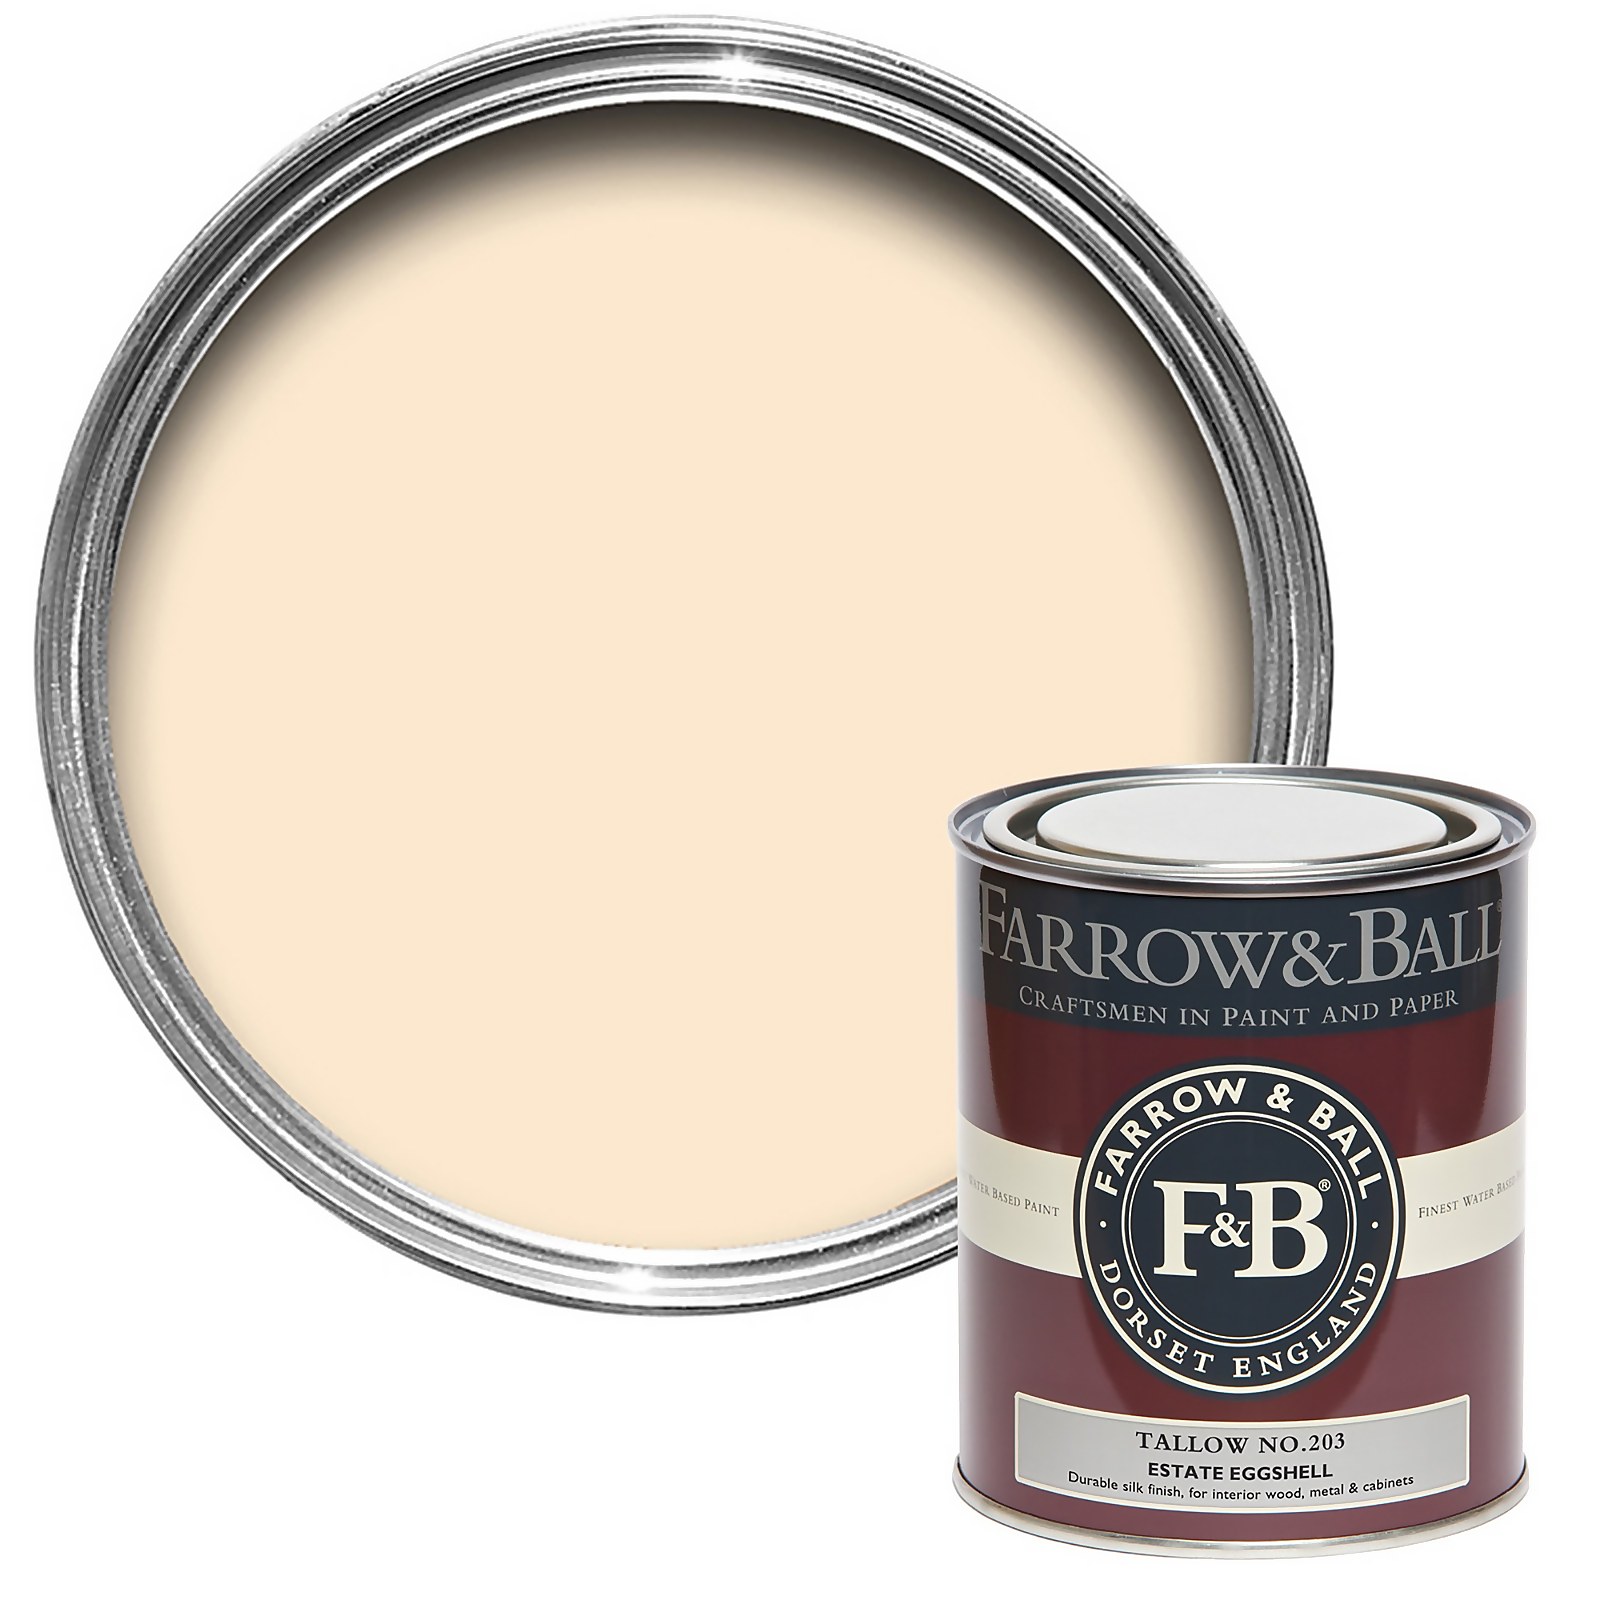 Farrow & Ball Estate Eggshell Paint Tallow No.203 - 750ml